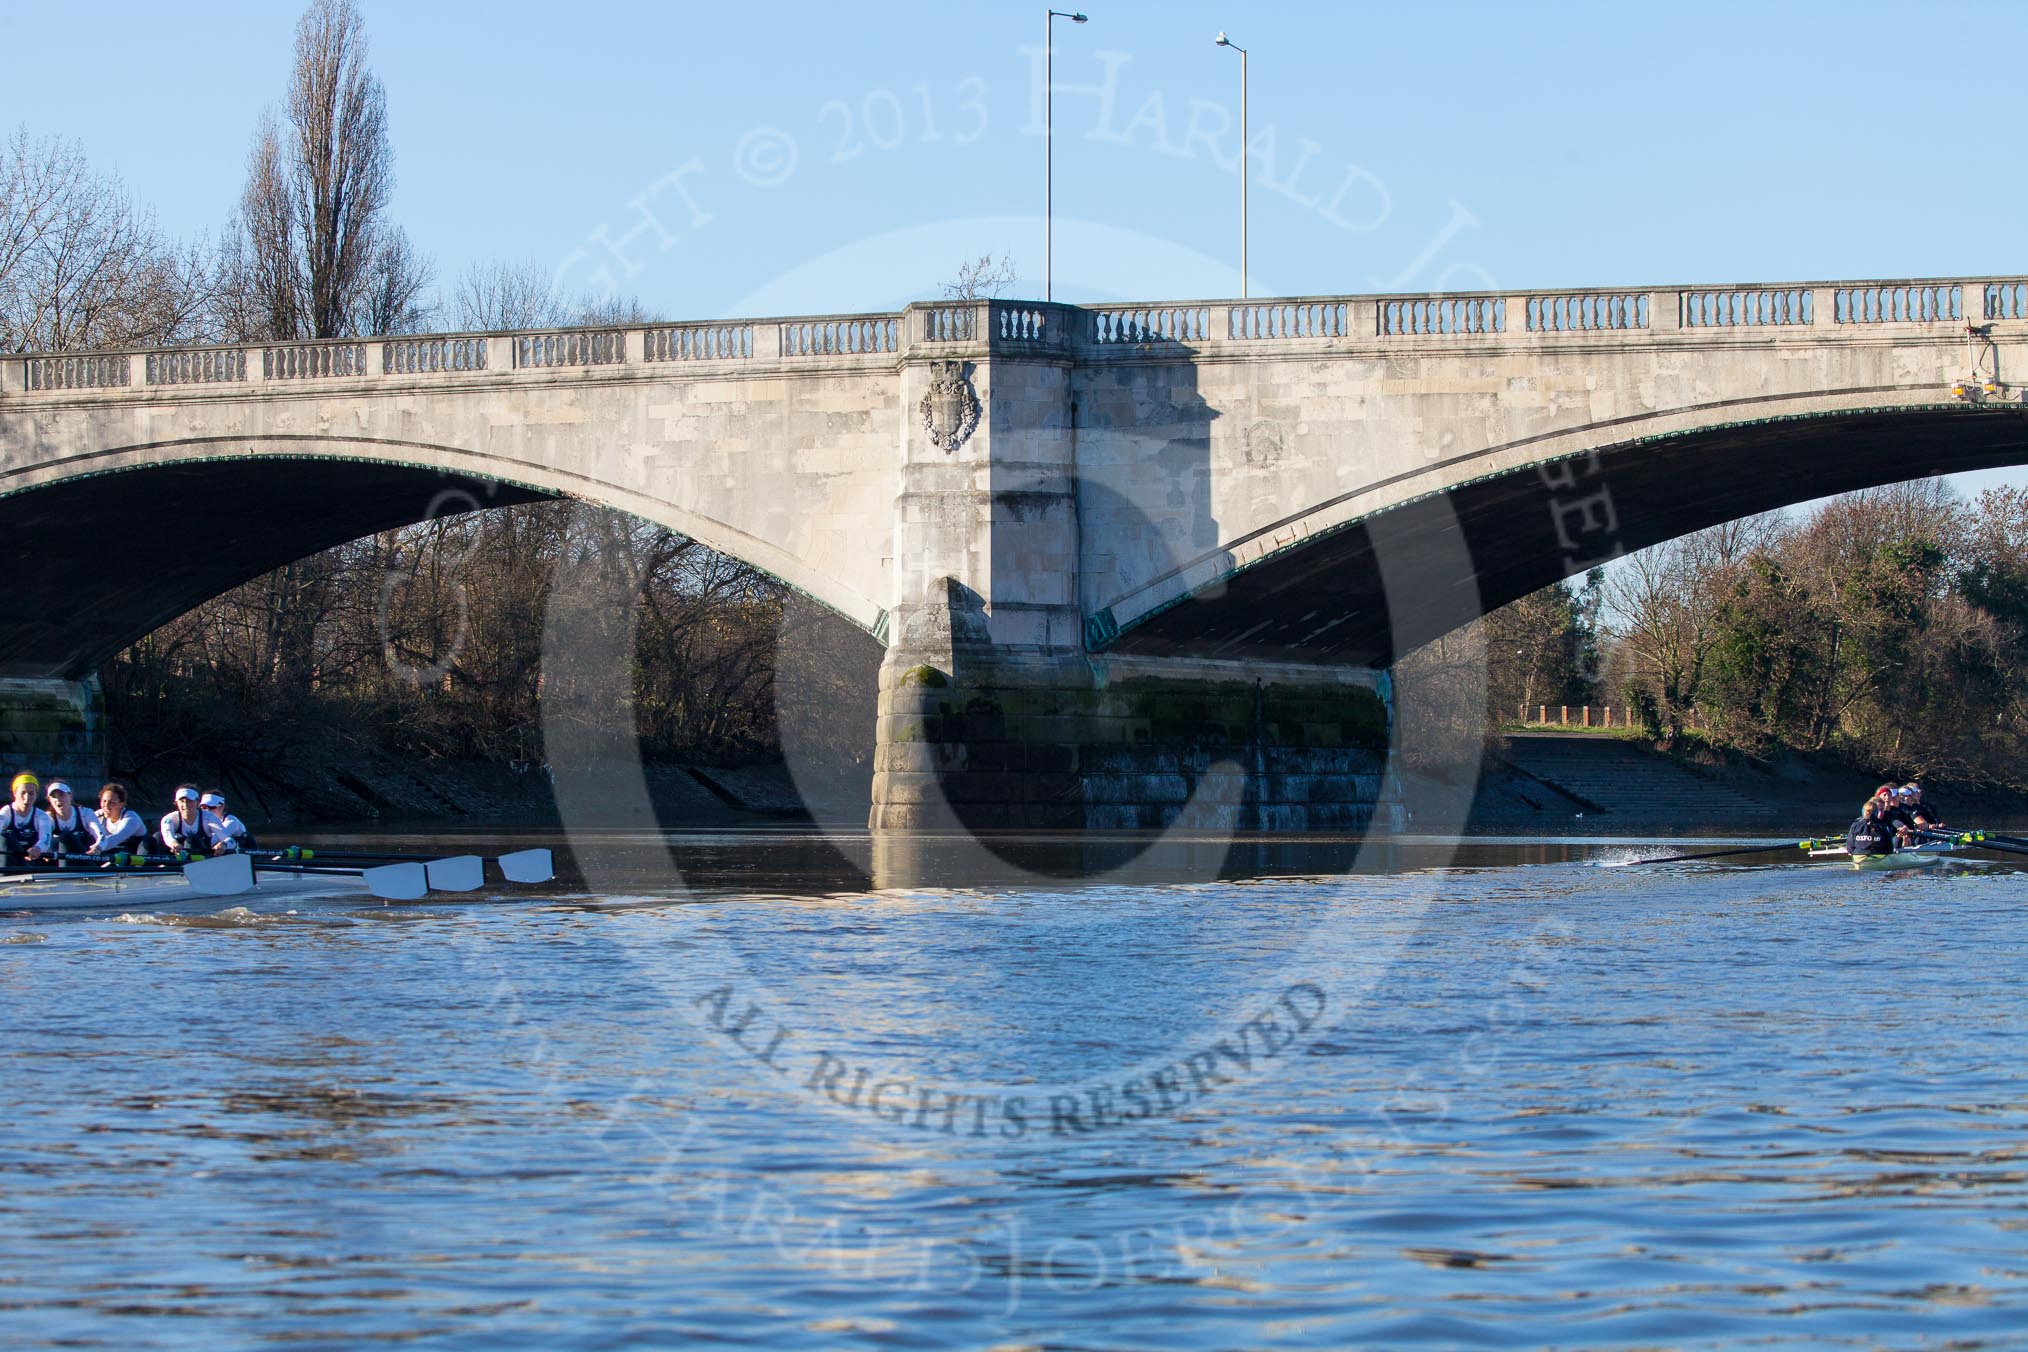 The Boat Race season 2014 - Women's Trial VIIIs (OUWBC, Oxford): Boudicca vs Cleopatra..
River Thames between Putney Bridge and Mortlake,
London SW15,

United Kingdom,
on 19 December 2013 at 13:04, image #245